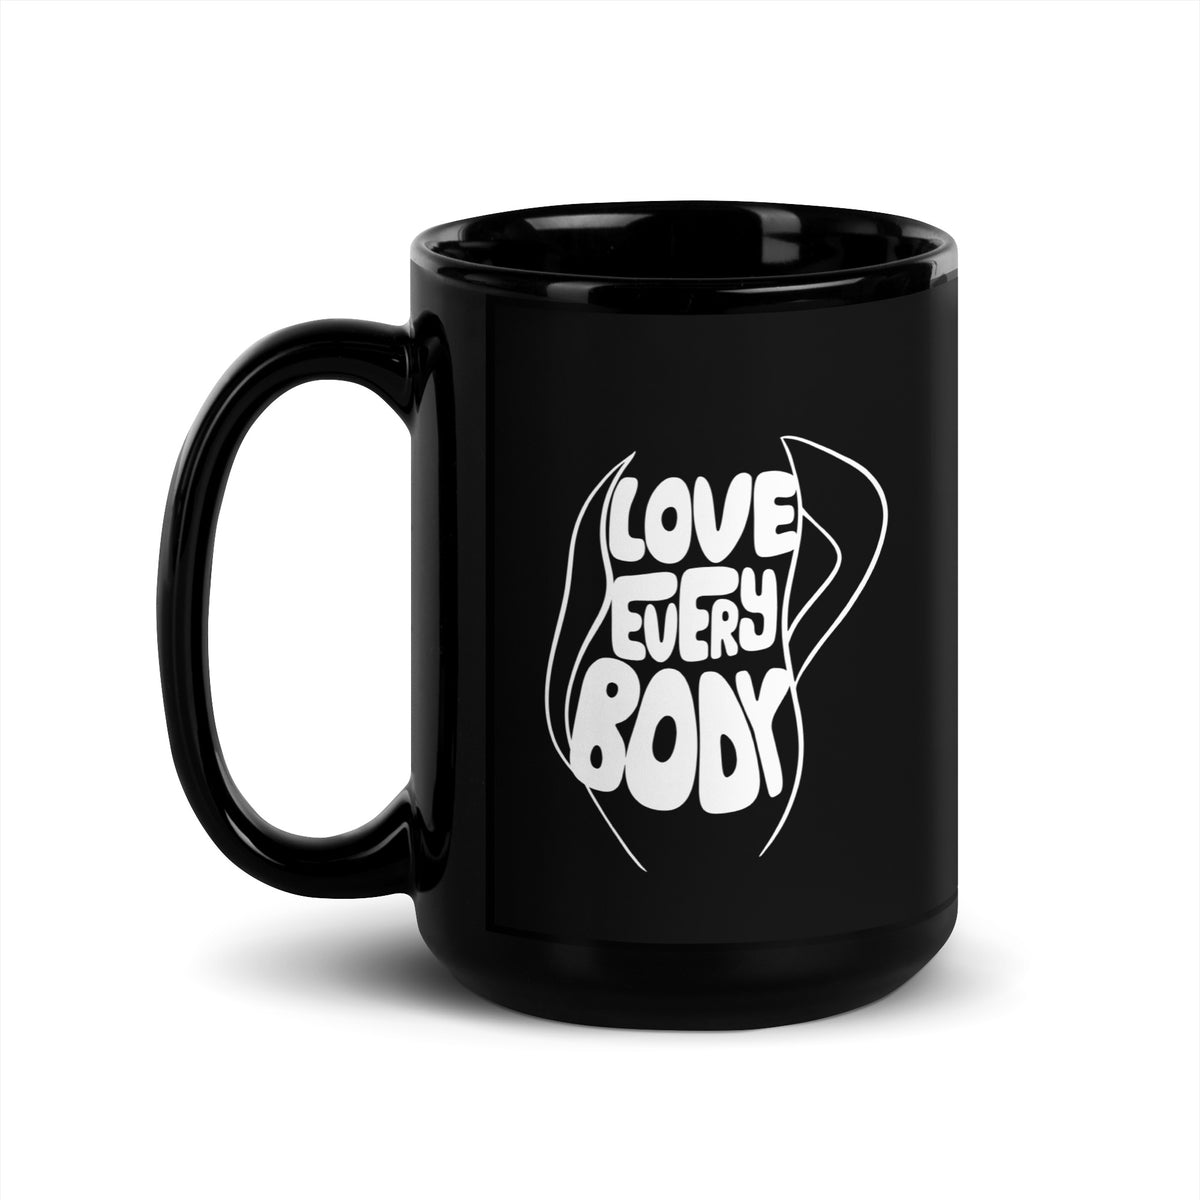 Love Every Body Mug